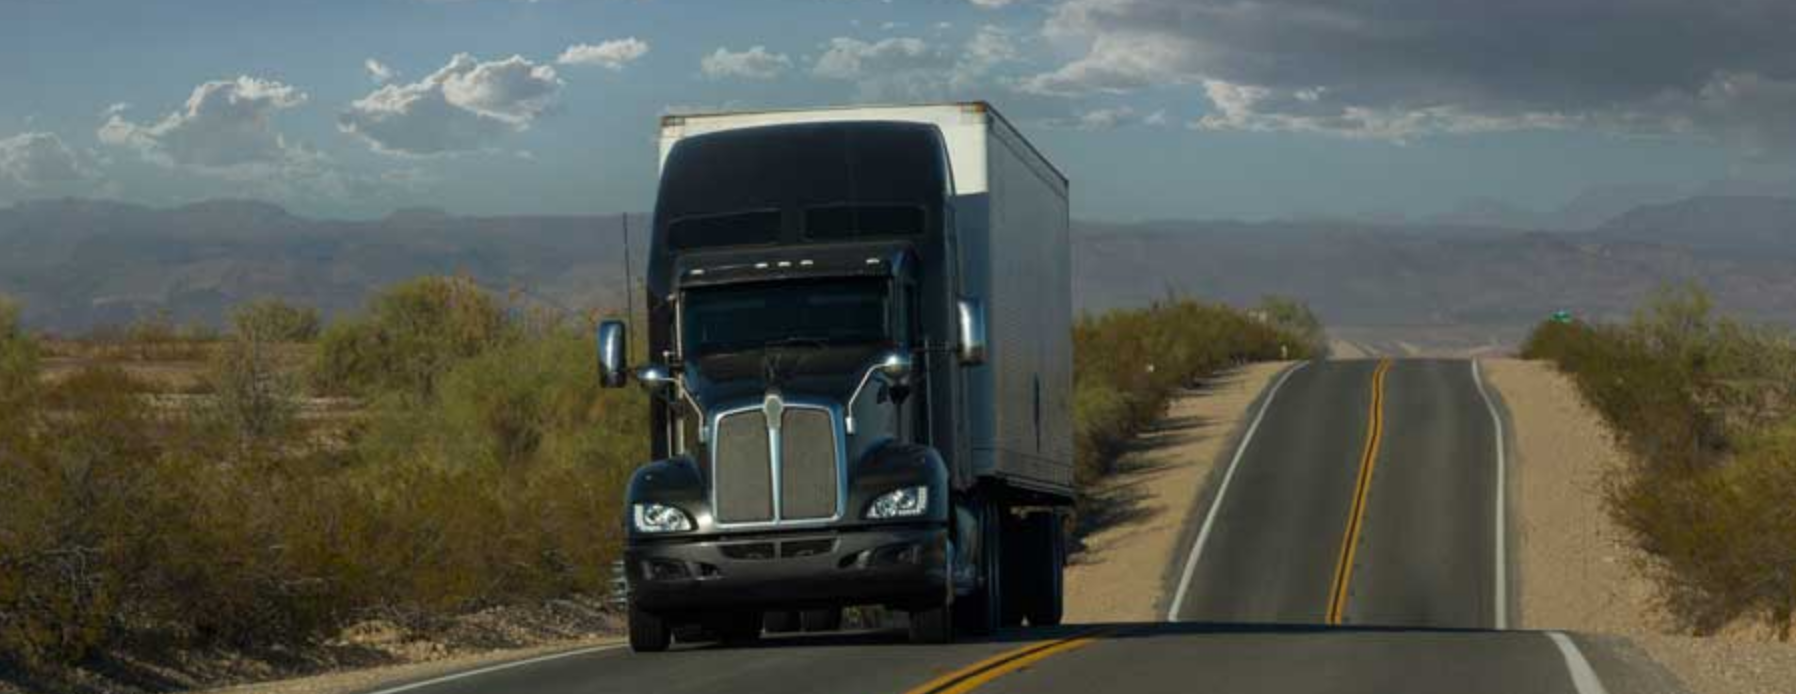 DEFs and California Truck Regulations